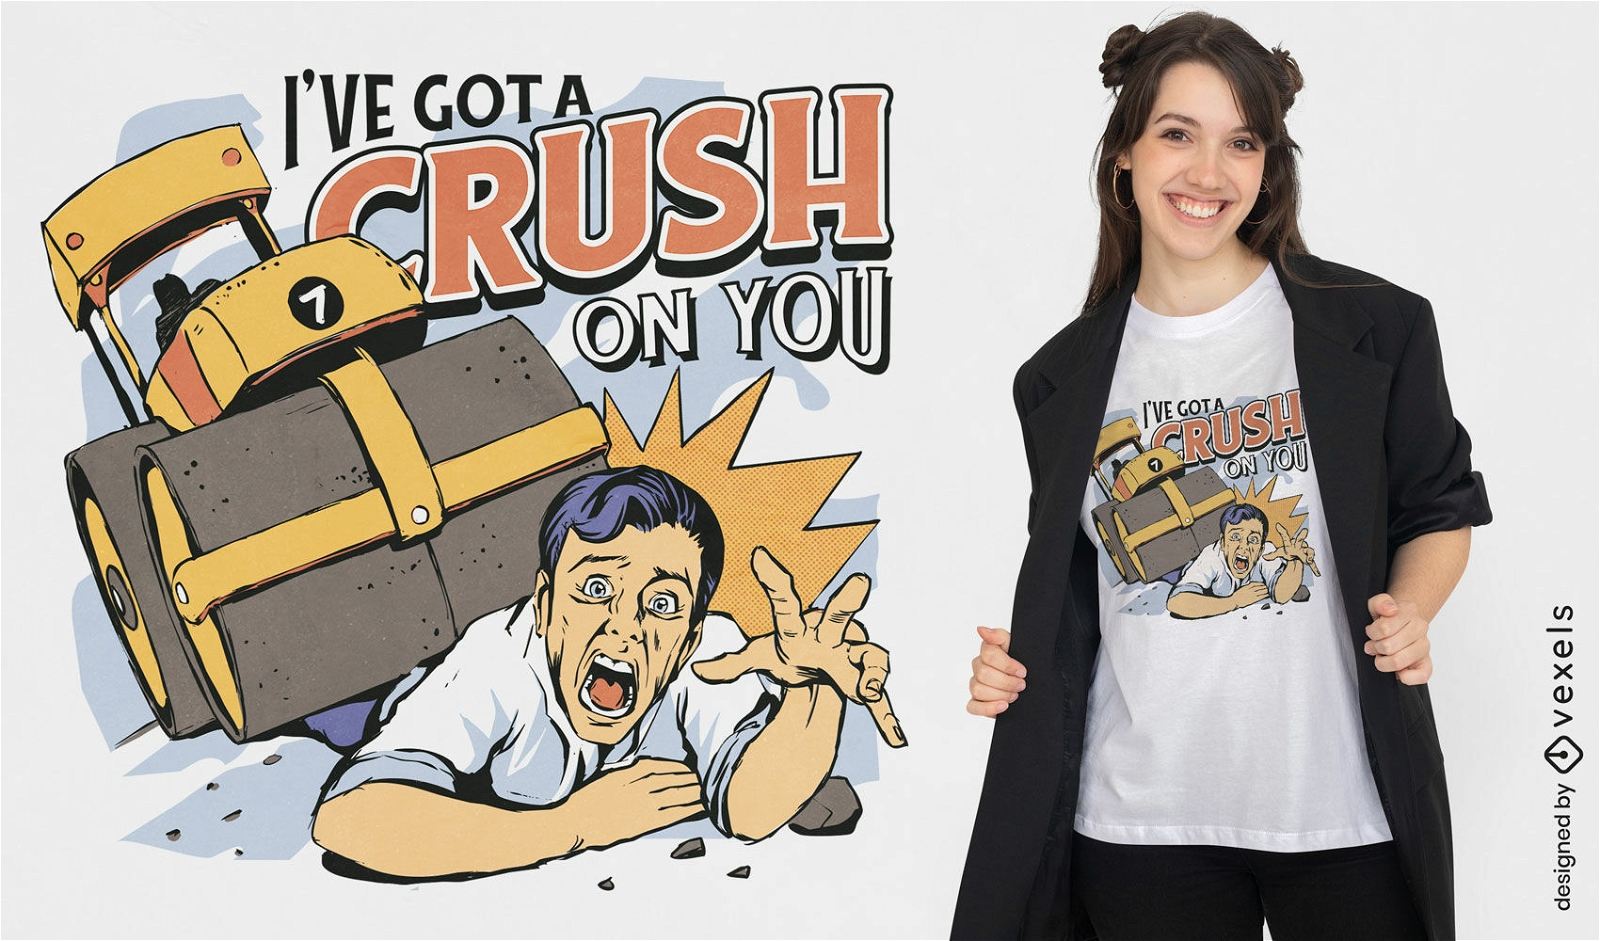 Steamroller crush on you cita el dise?o de la camiseta